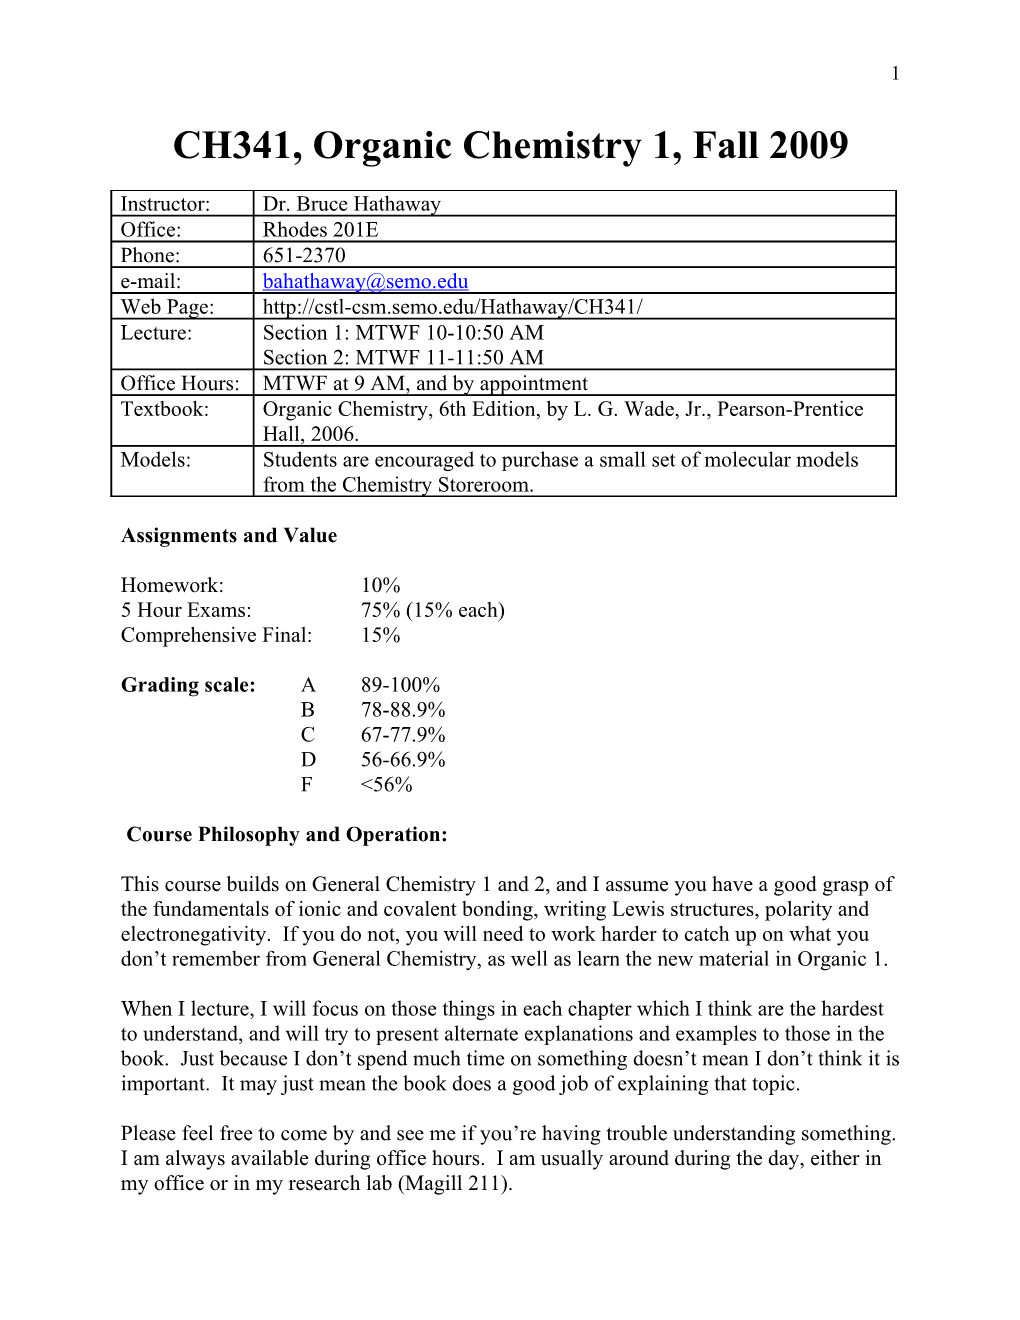 CH343, Organic Chemistry 1, Fall 2003